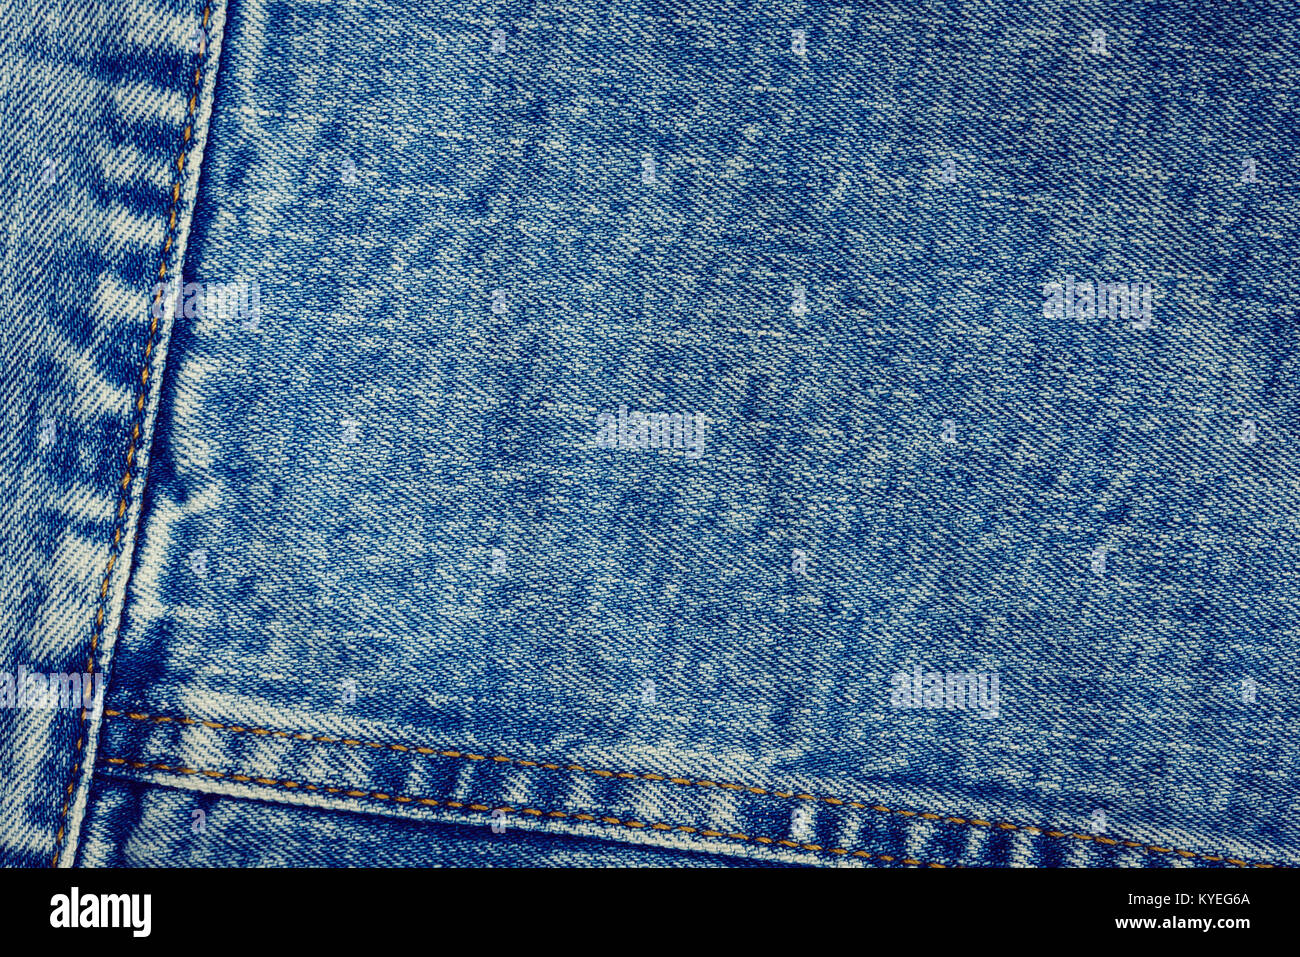 Textured vintage background - blue jeans textile denim with seam of ...